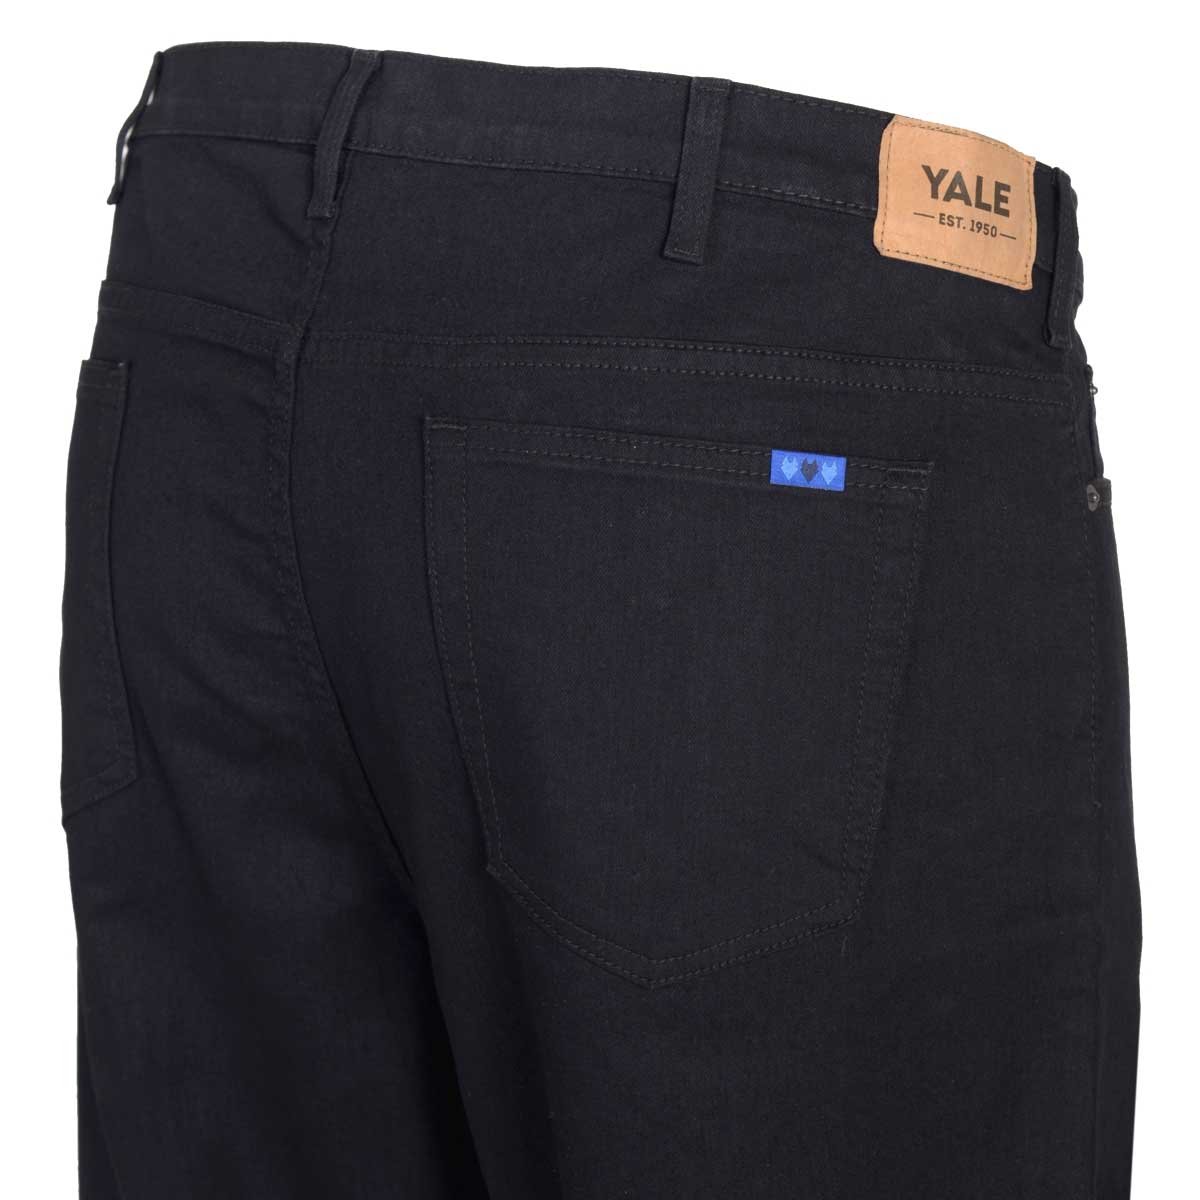 Jeans Teñidos Yale Plus